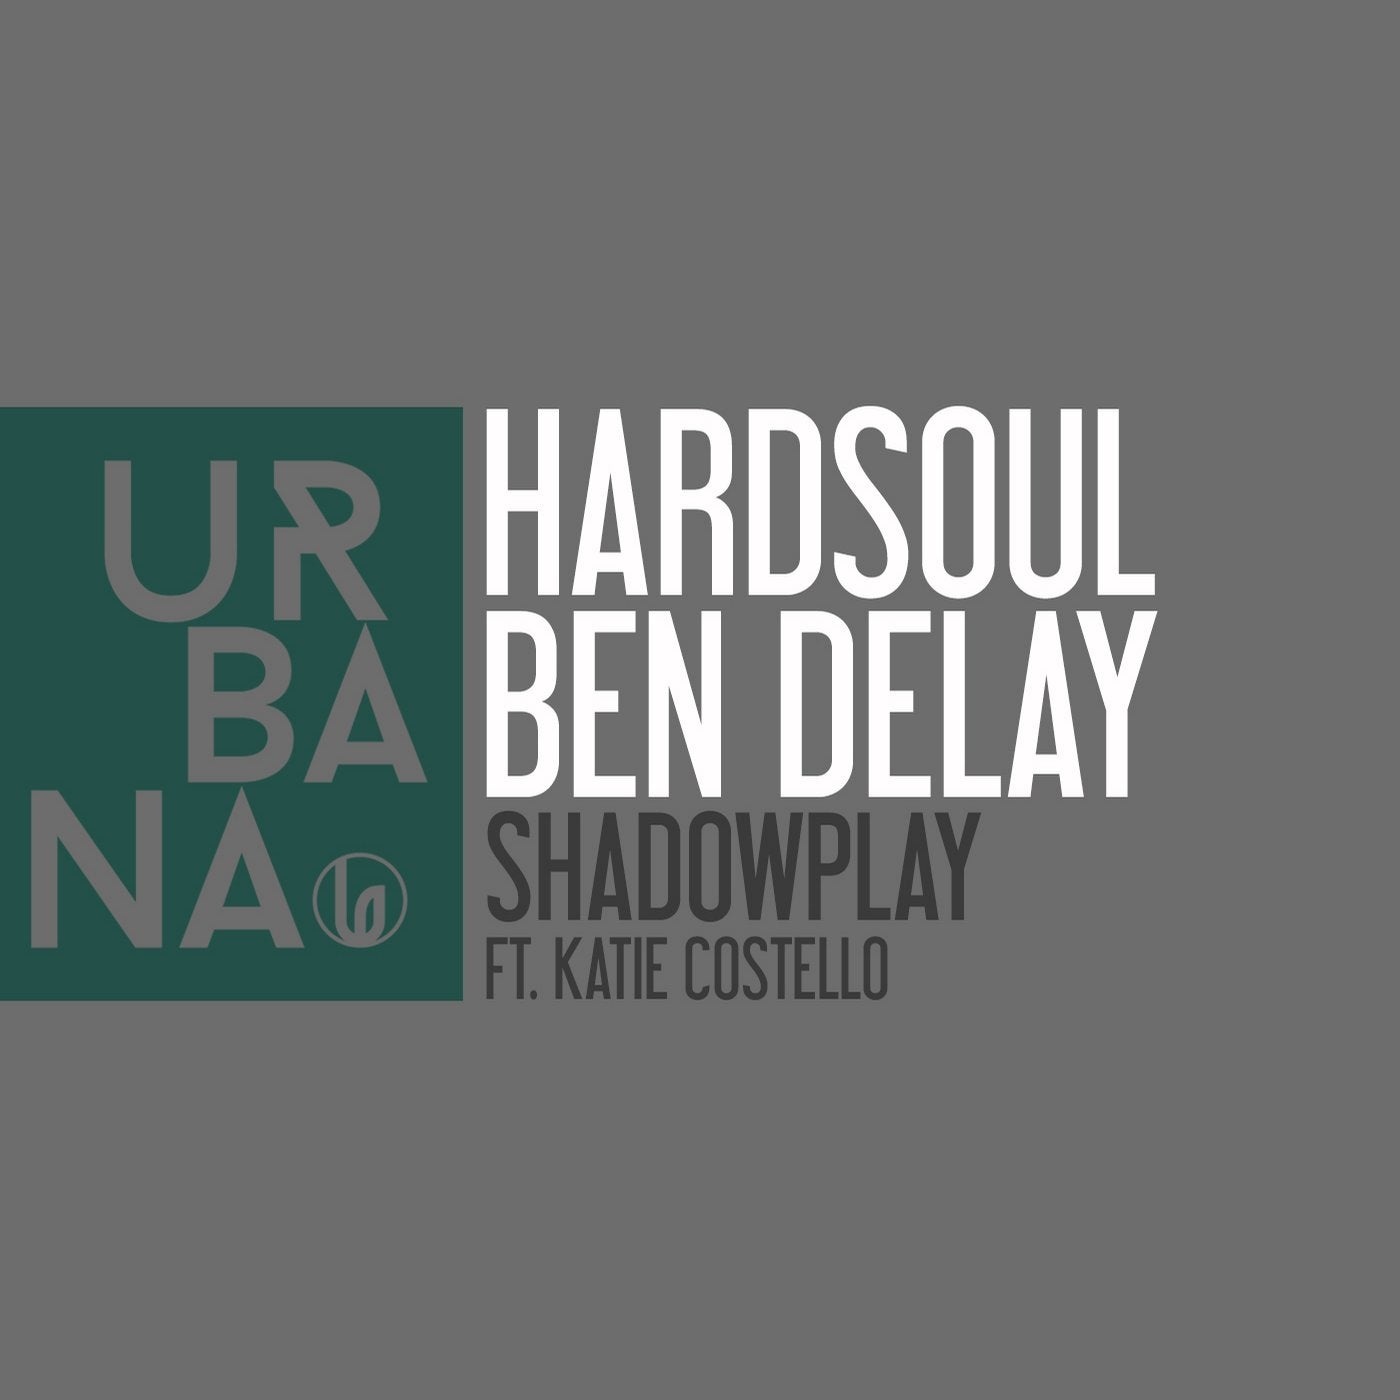 Ben delay feat. Hardsoul.